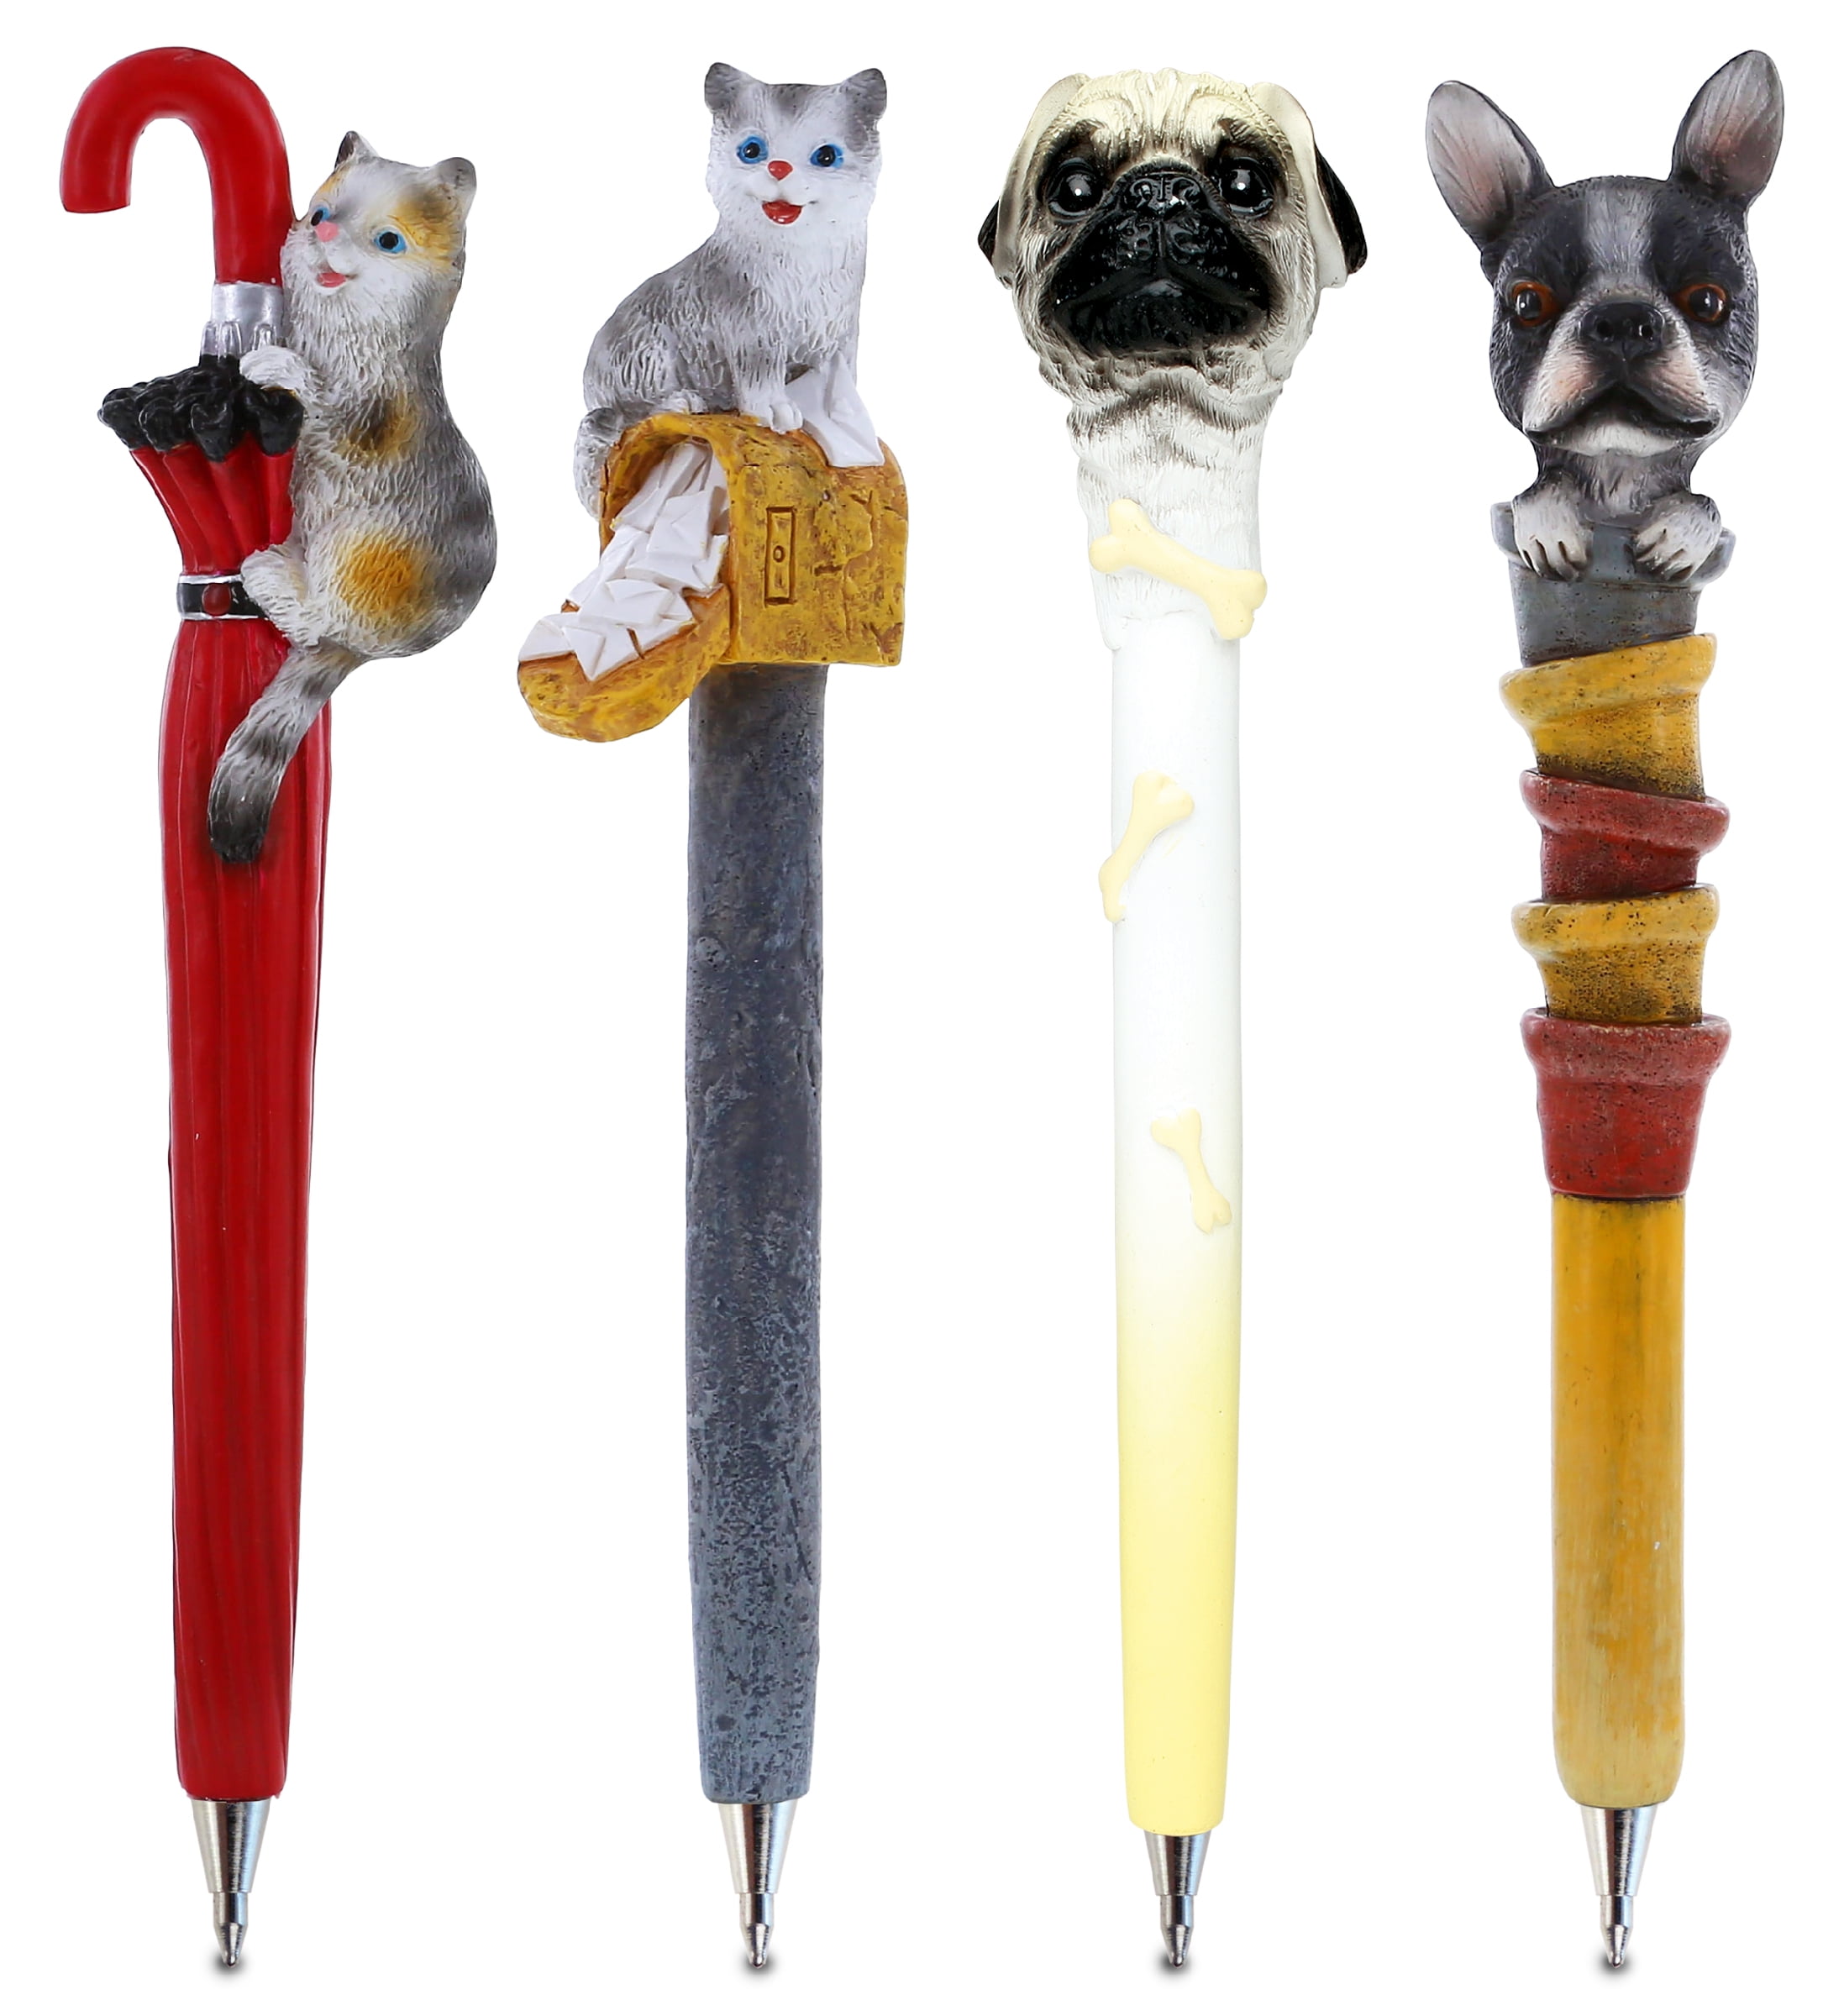 Generic 7PCS Funny Pen Set Colorful Leopard-Pattern Ballpoint Pen